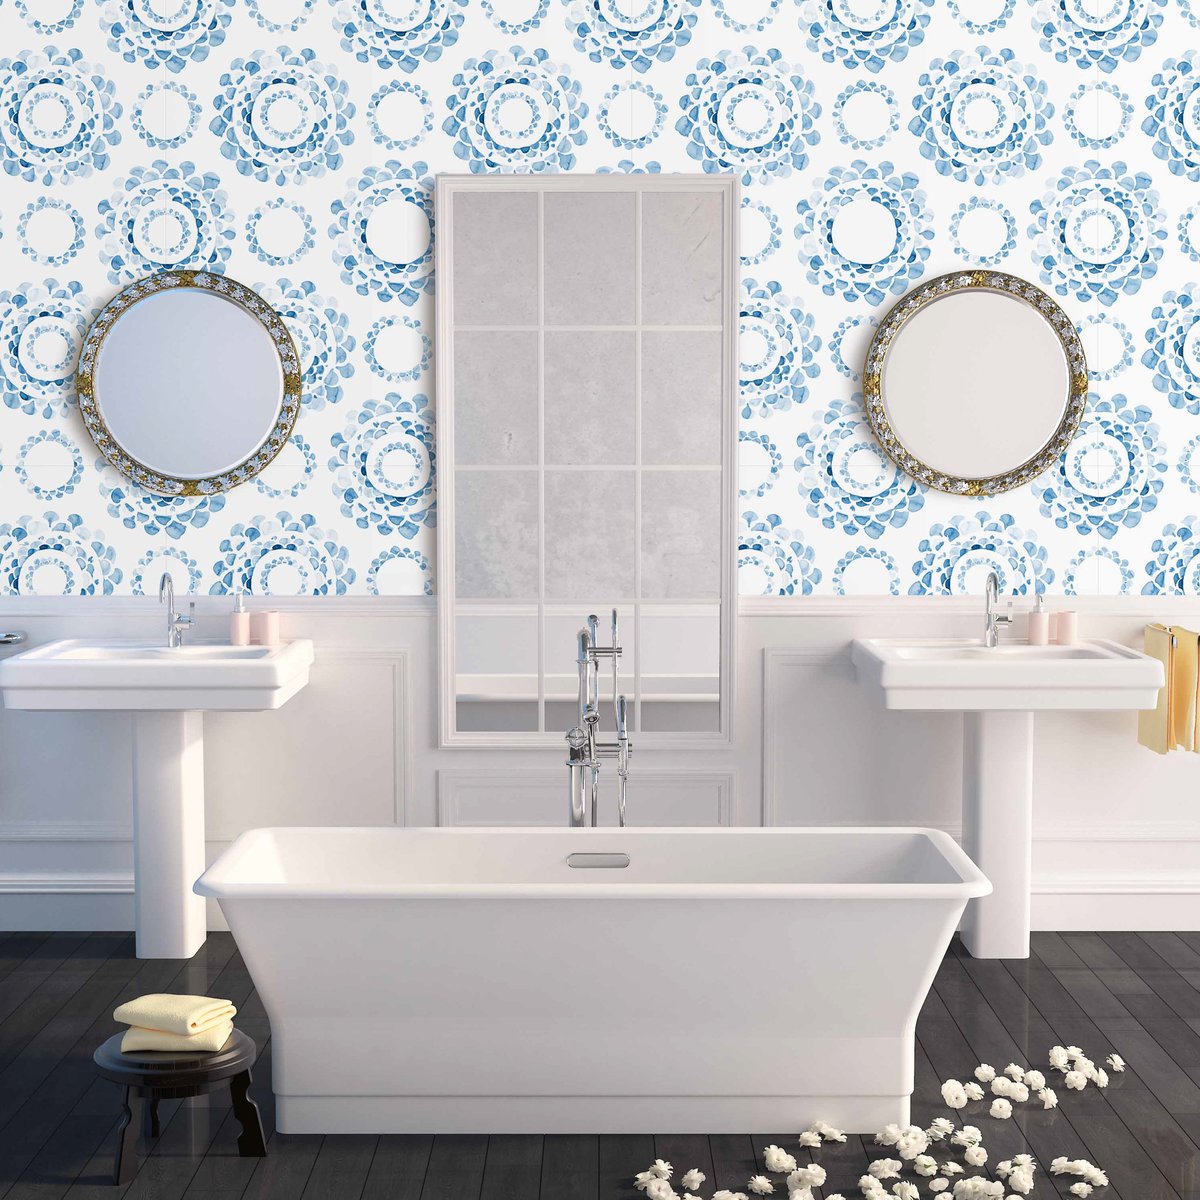 Beautiful Blue and White Wallpaper Patterns